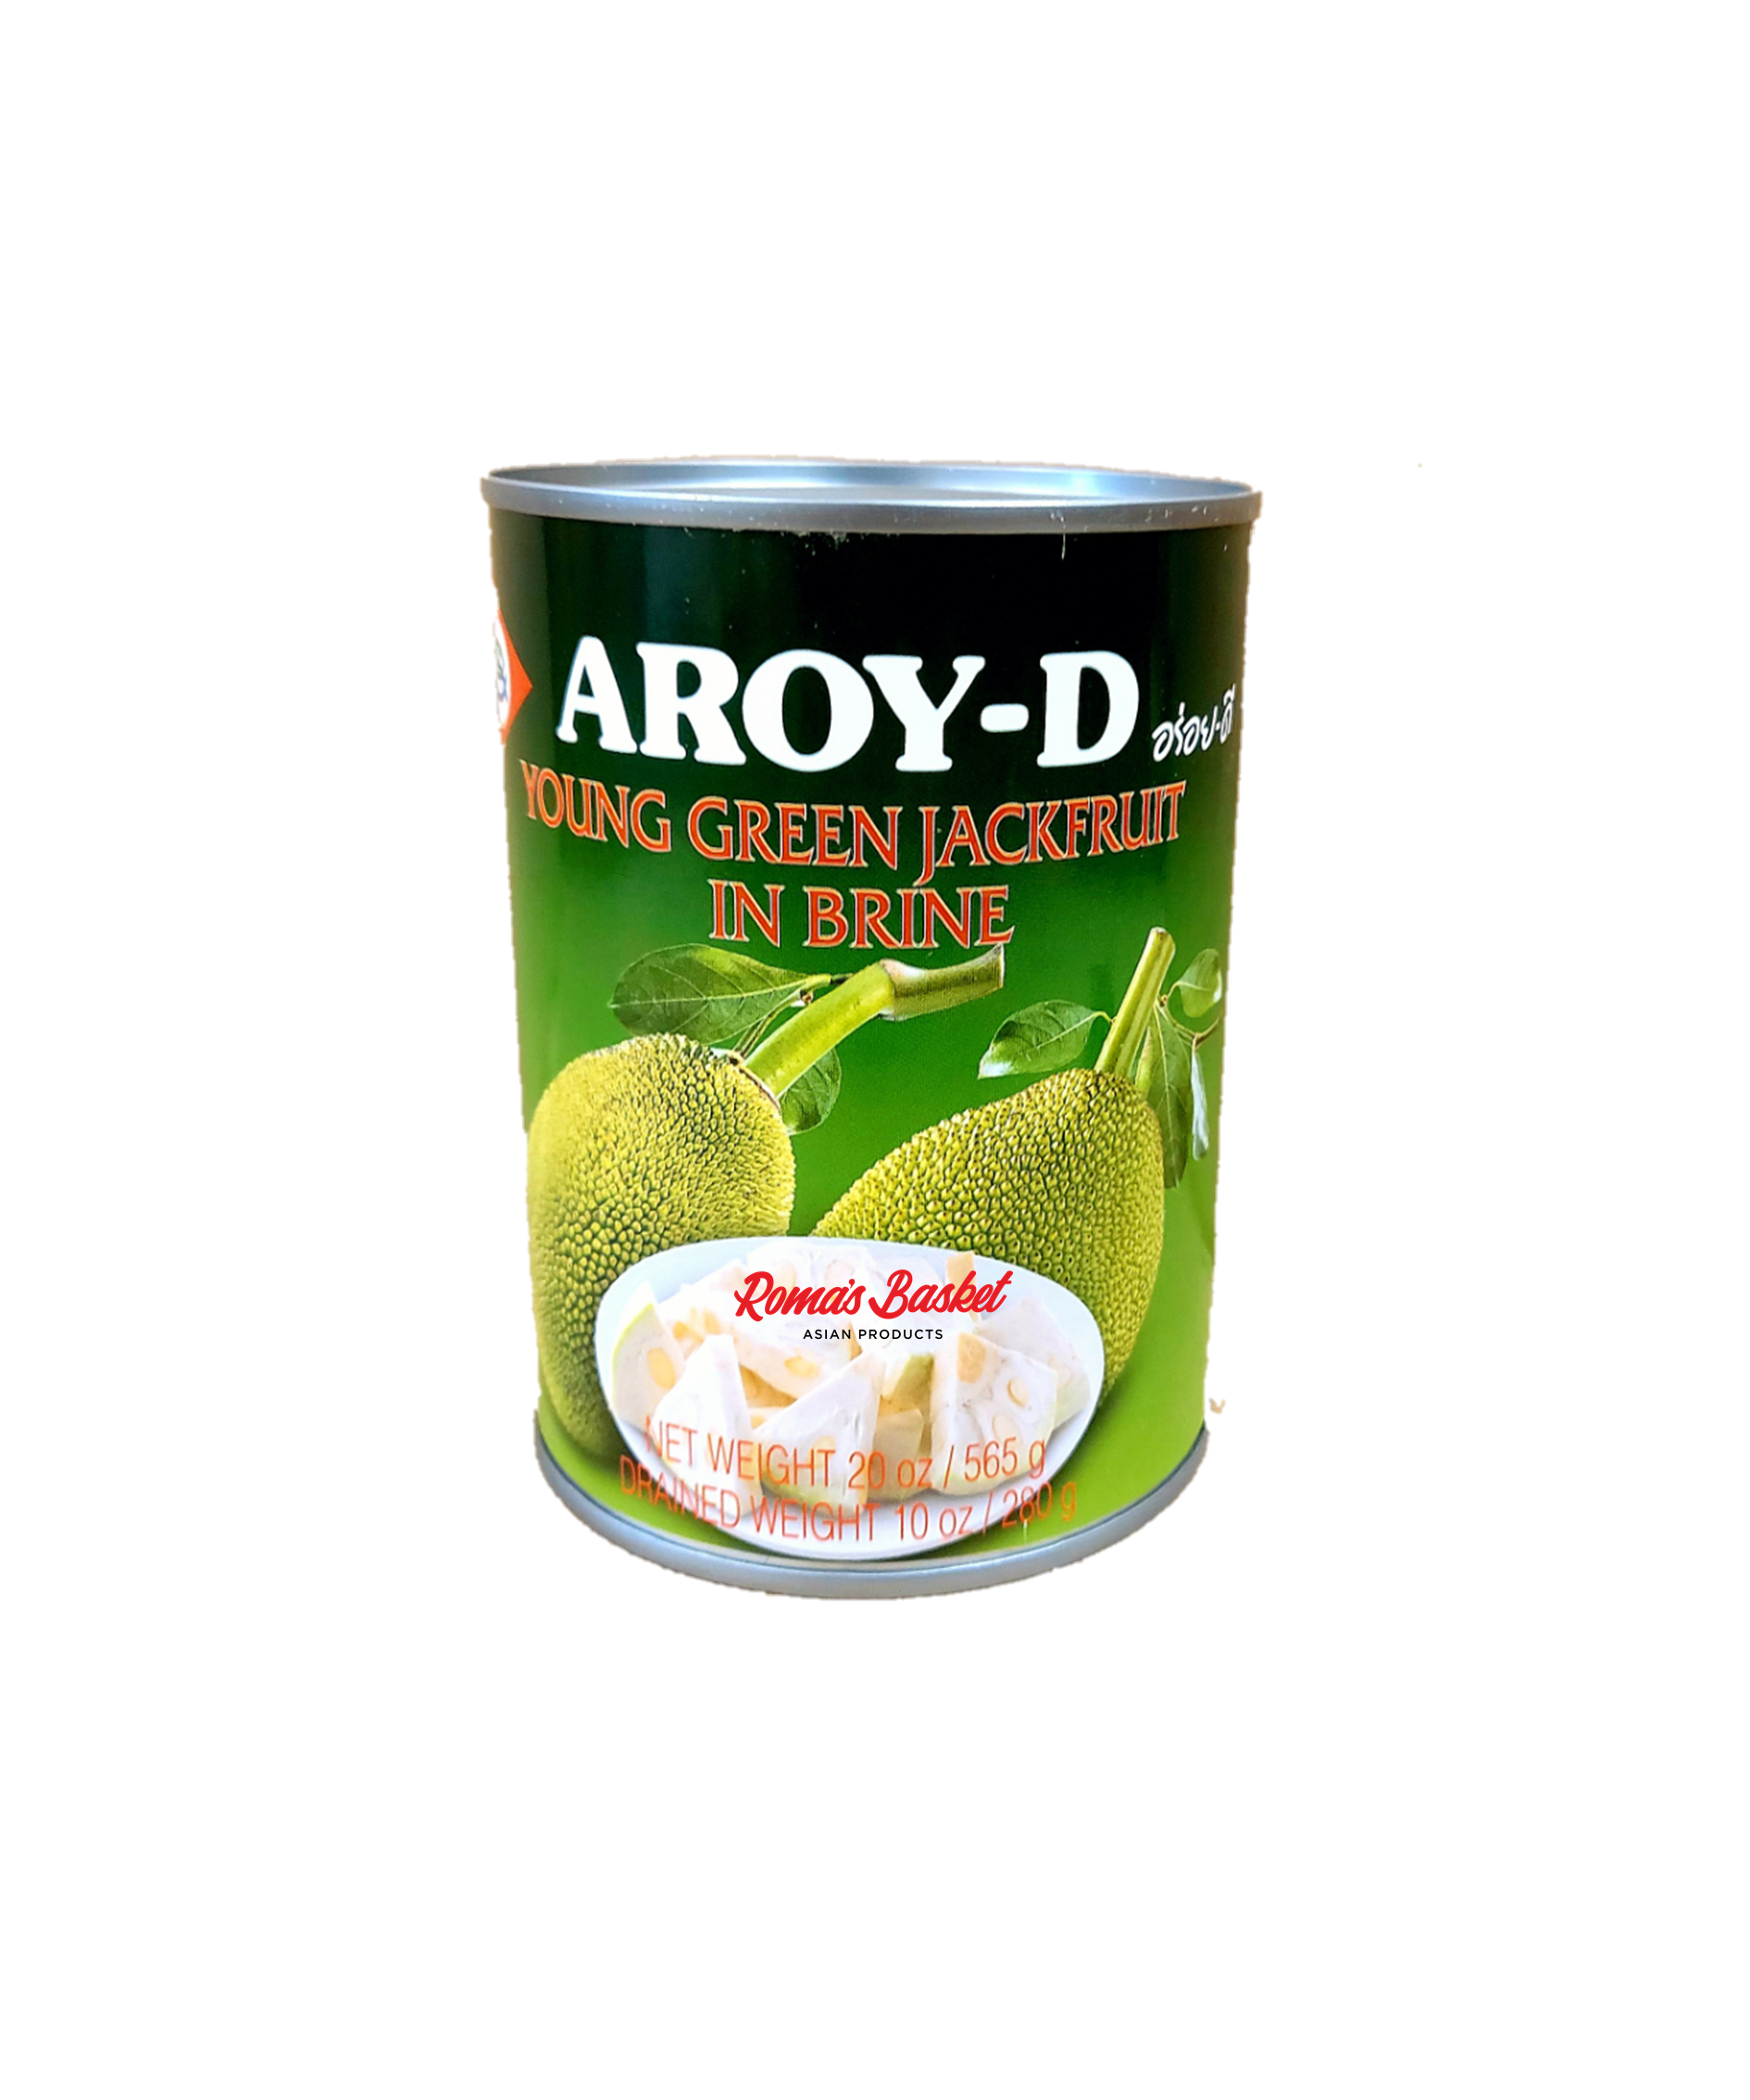 AroyD Green Jackfruit in Brine 565g